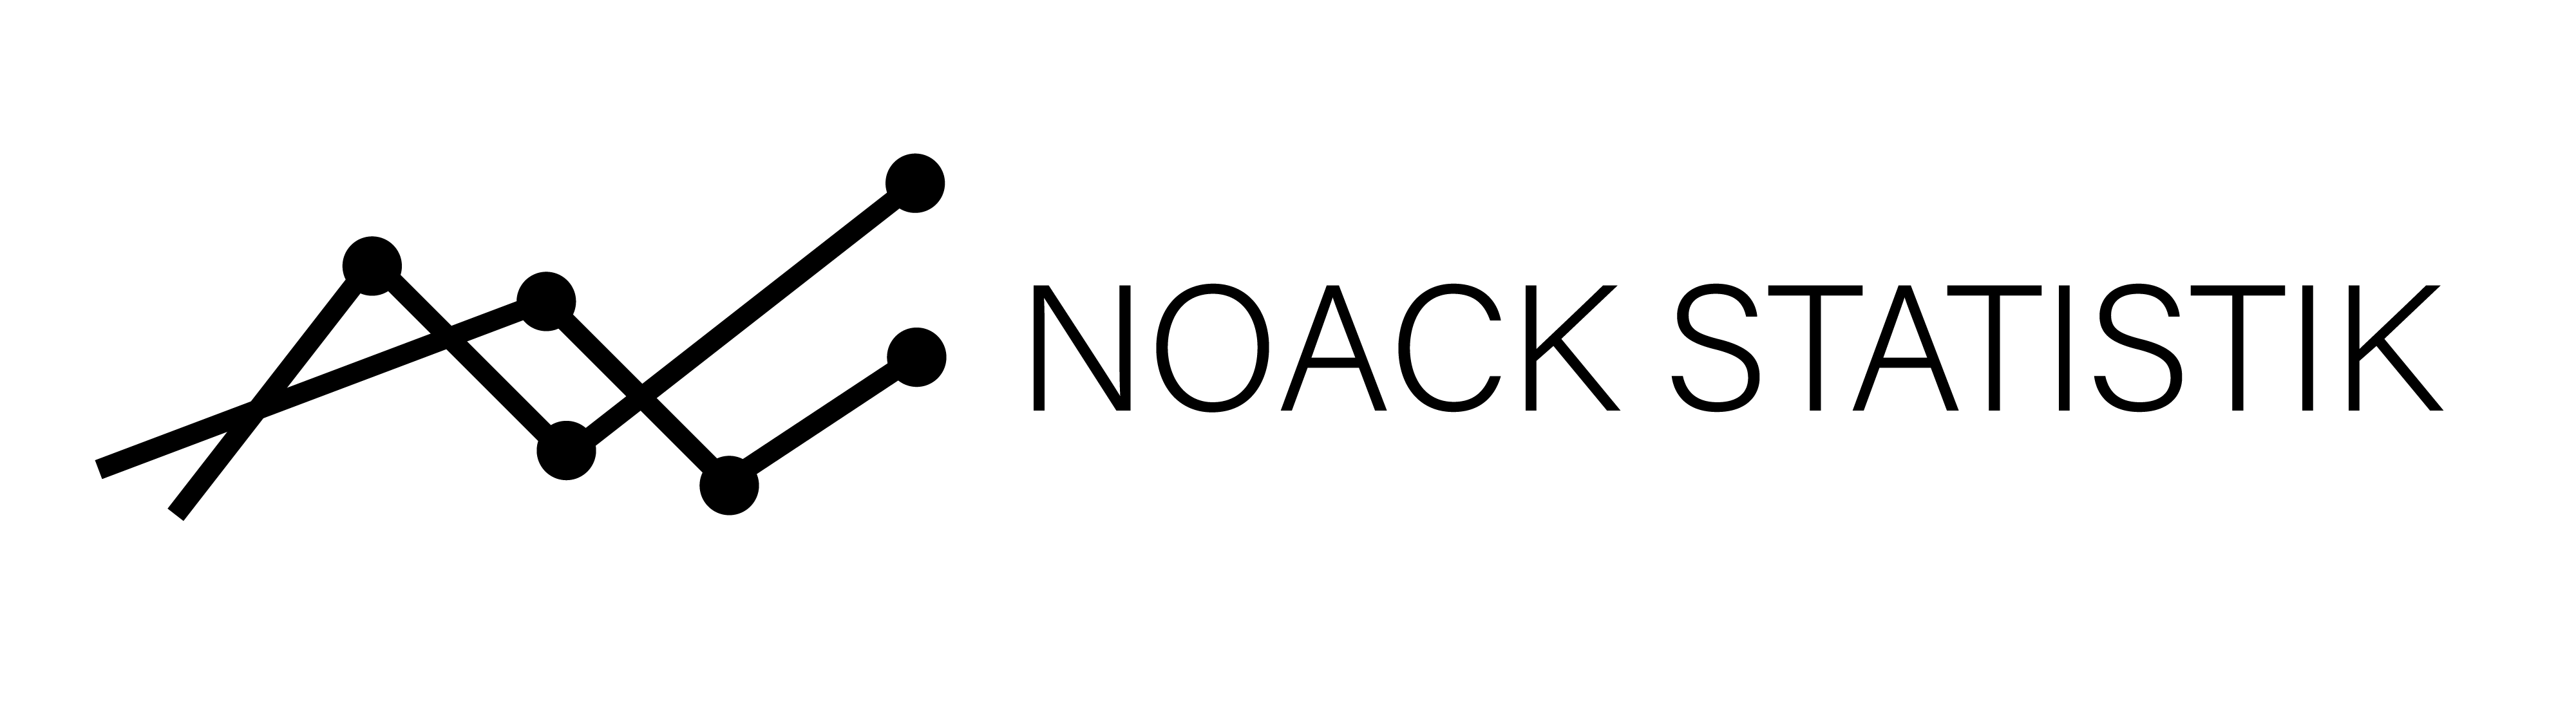 Noack Statistik GmbH logo